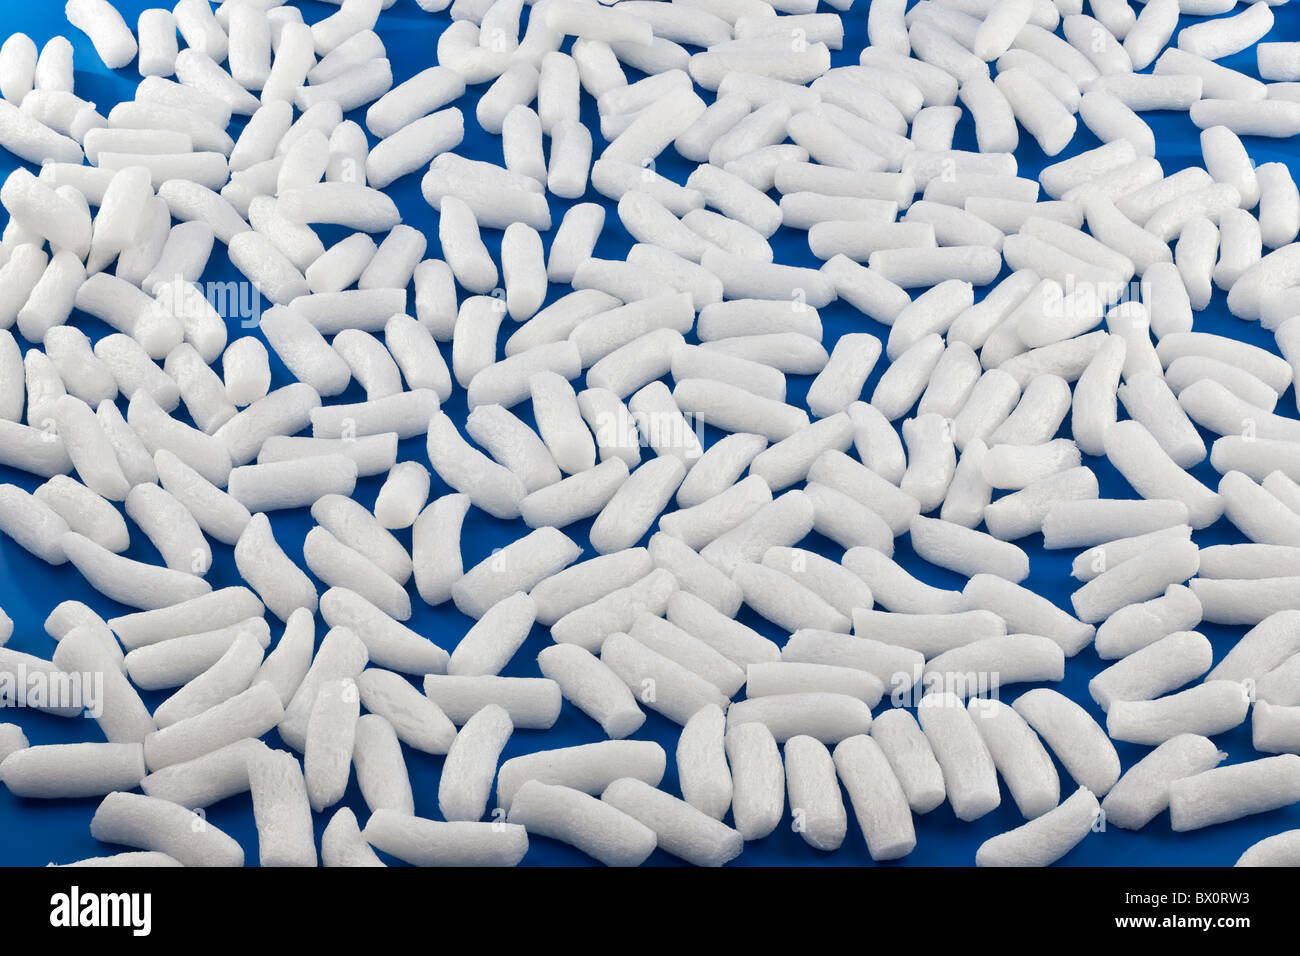 White sticks of foam on a blue background Stock Photo